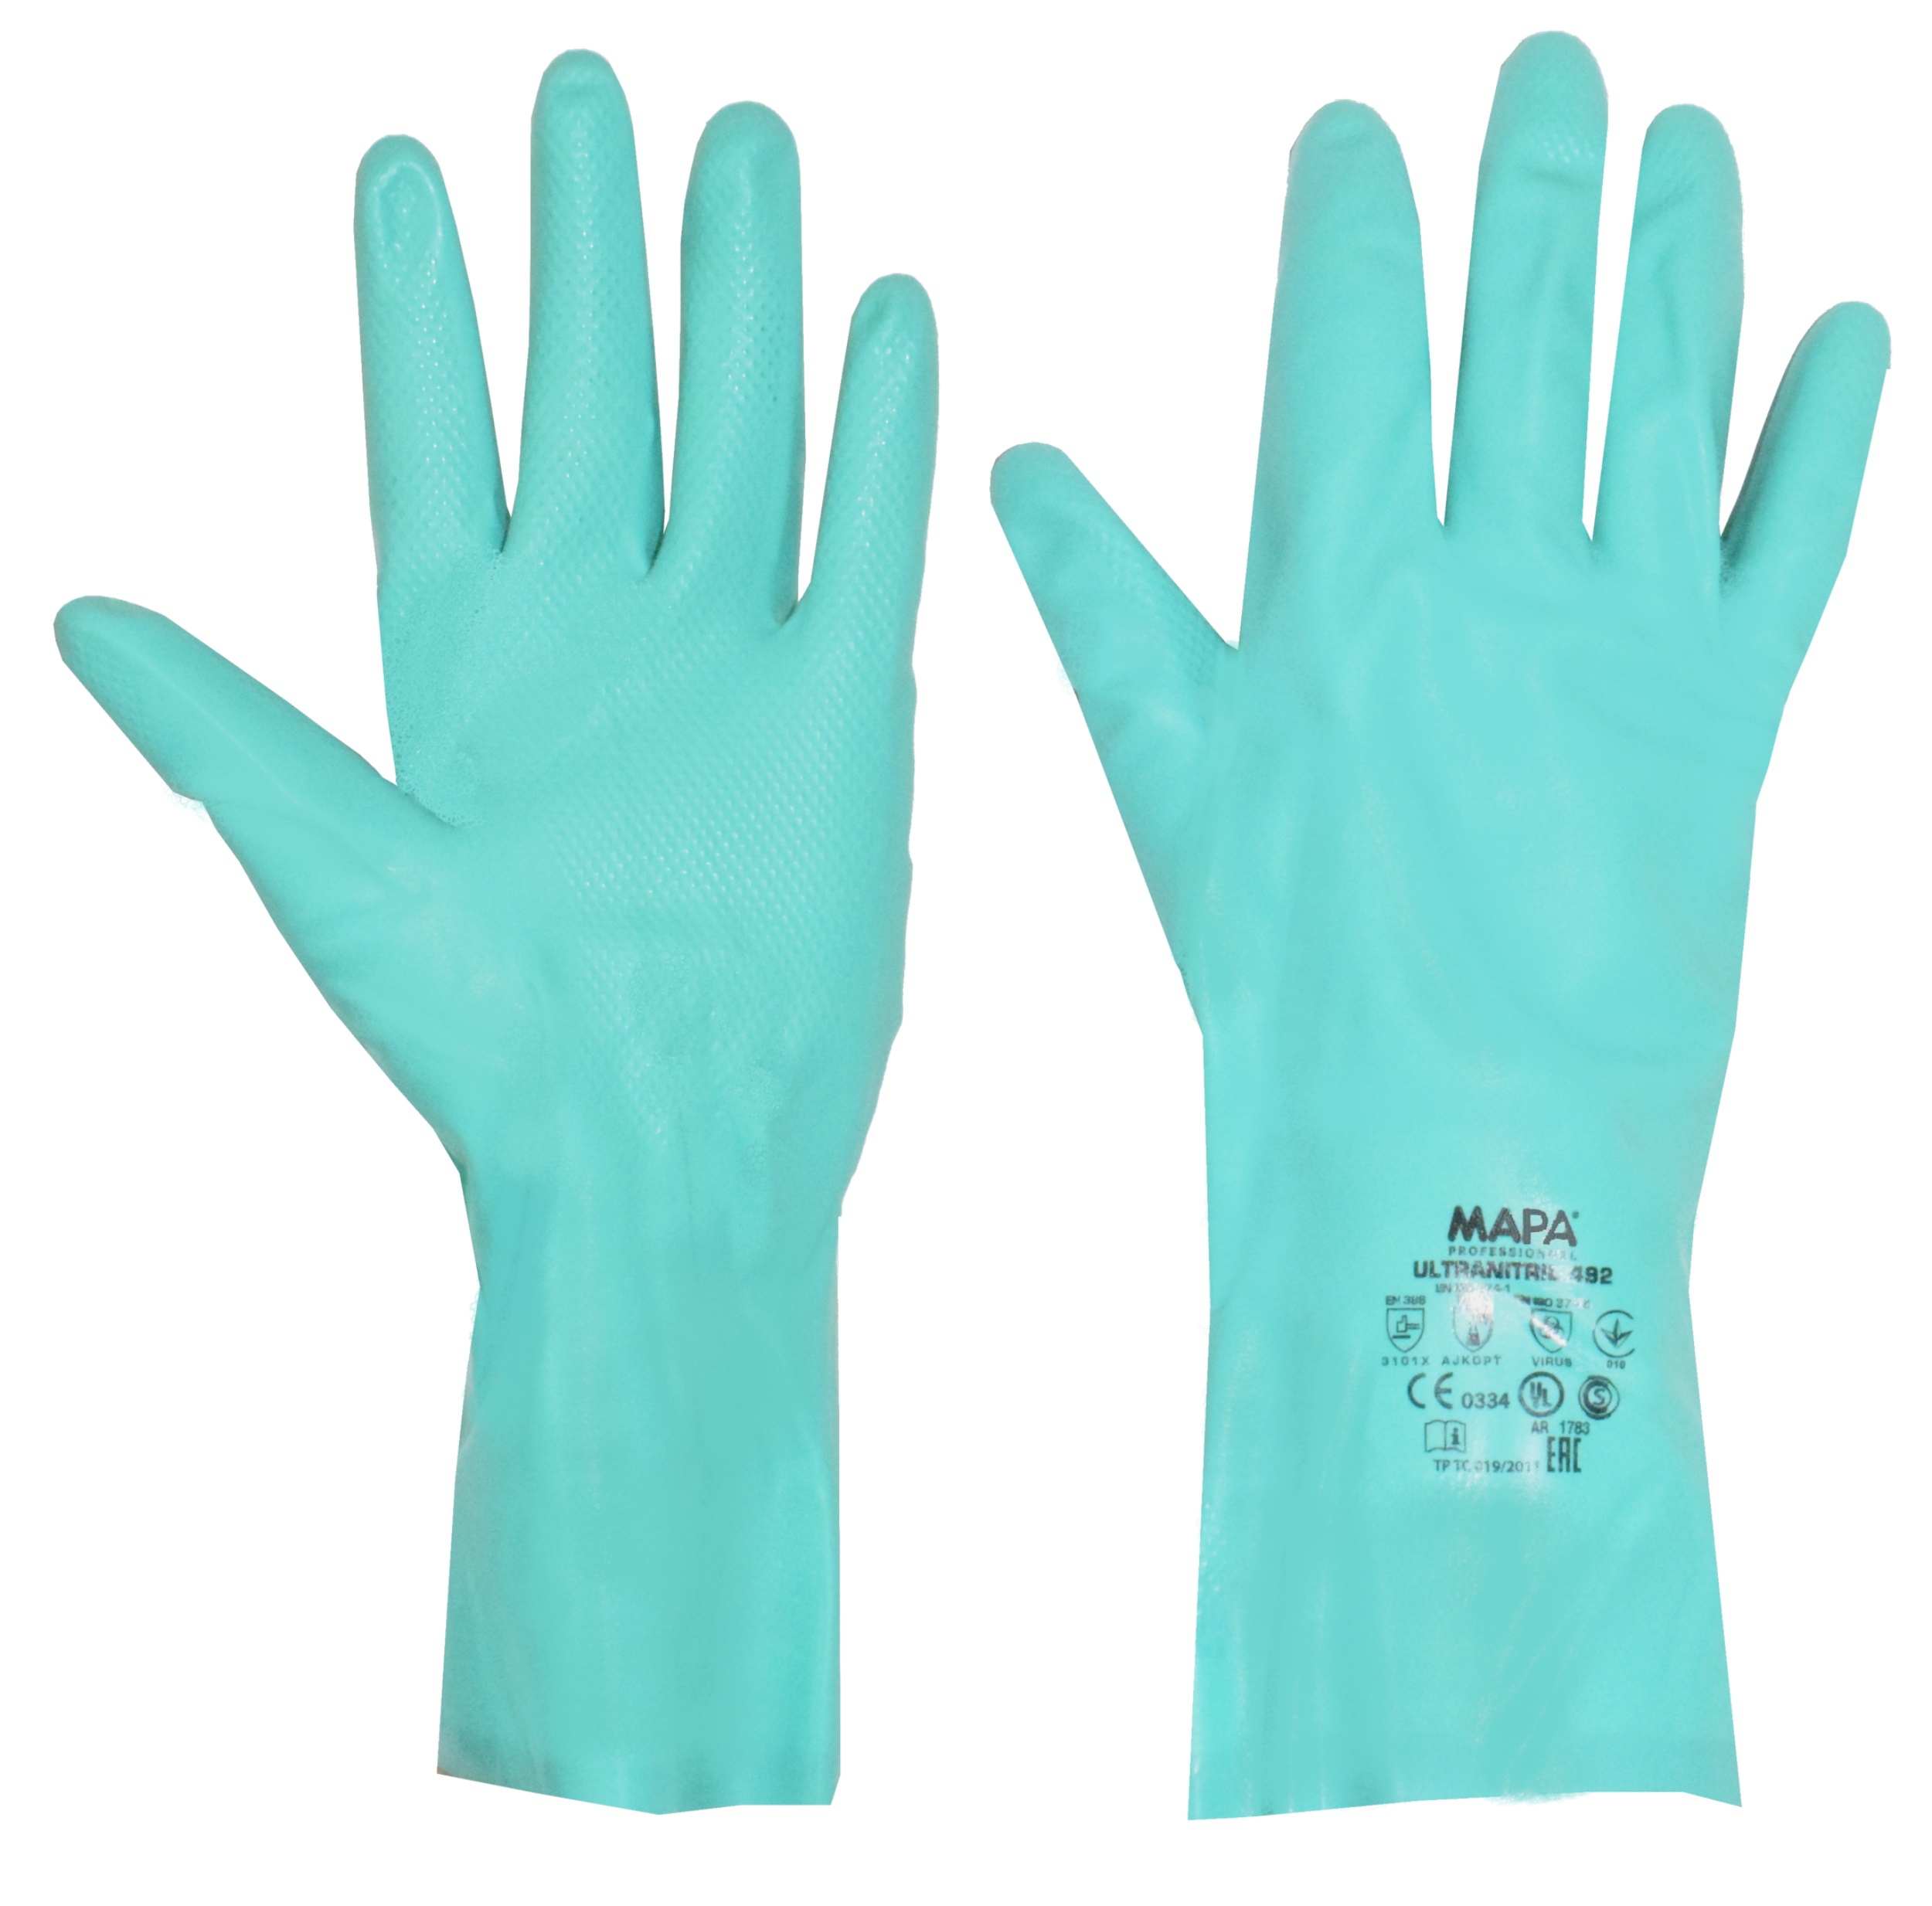 Epoxy protective glove with nitrile coating